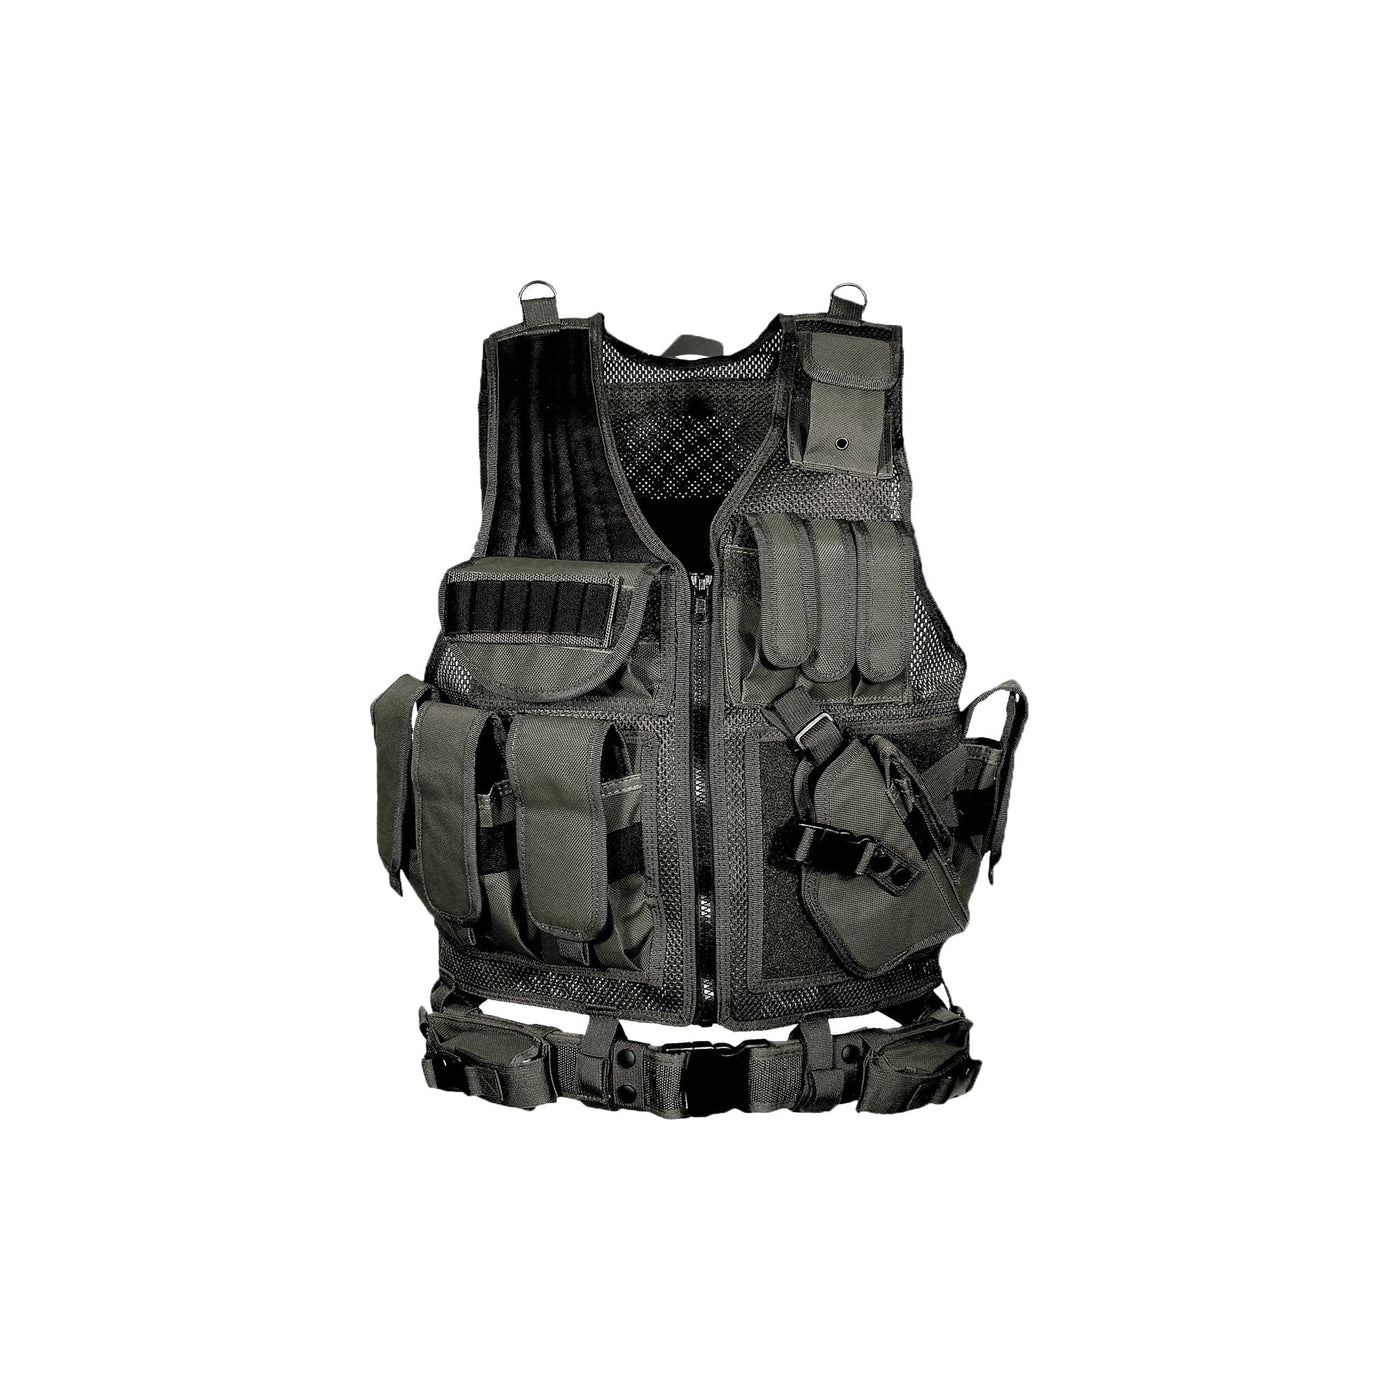 Leapers, Inc. - UTG Utg Le Tactical Vest Black Holsters